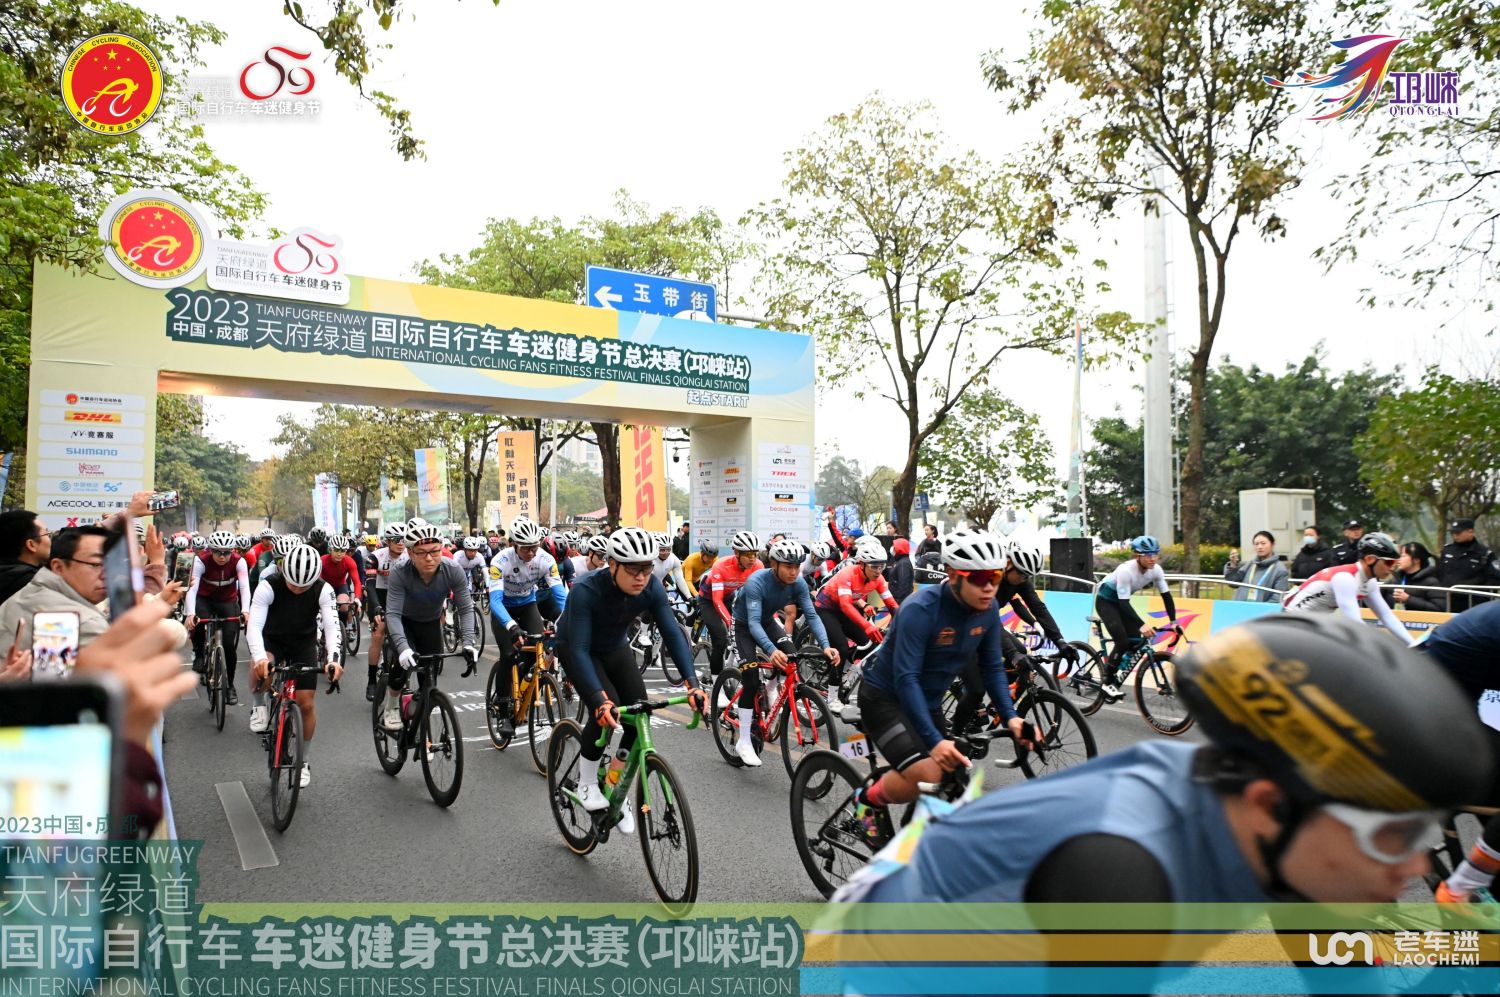 Beoka mbantu para atlet sprint menyang Final Festival Kebugaran Penggemar Sepeda Internasional Tianfu Greenway 2023